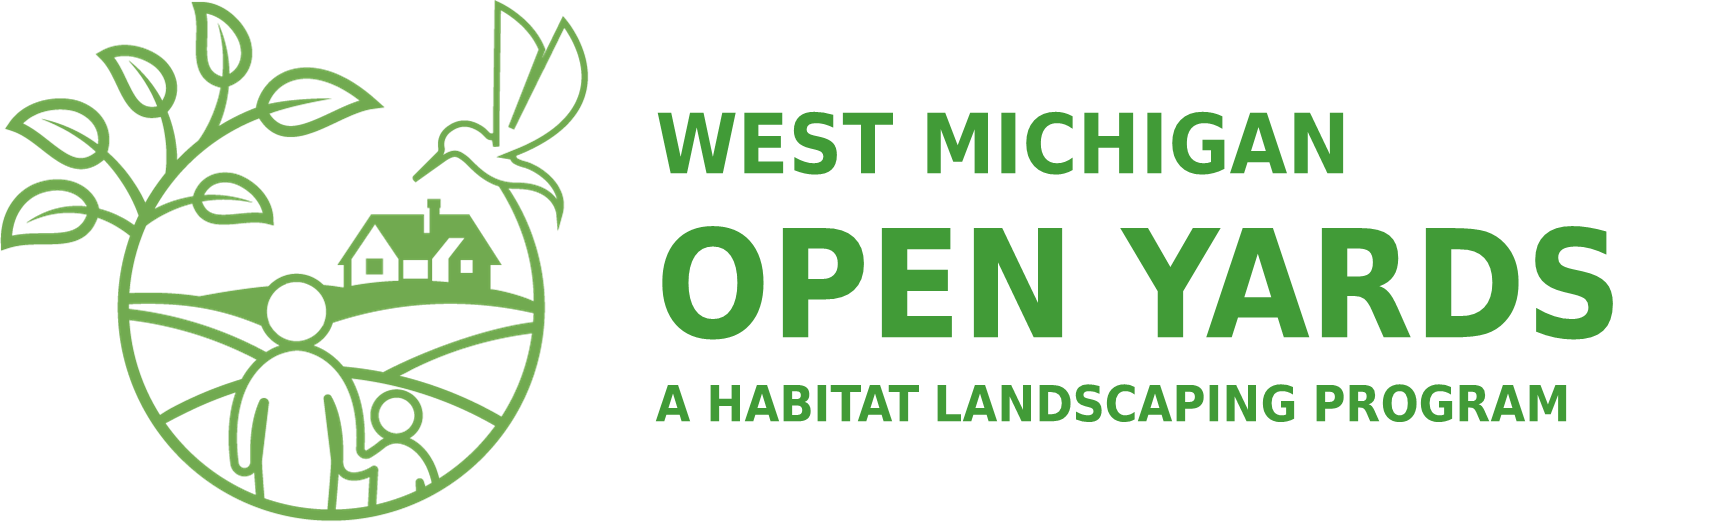 West Michigan Open Yards